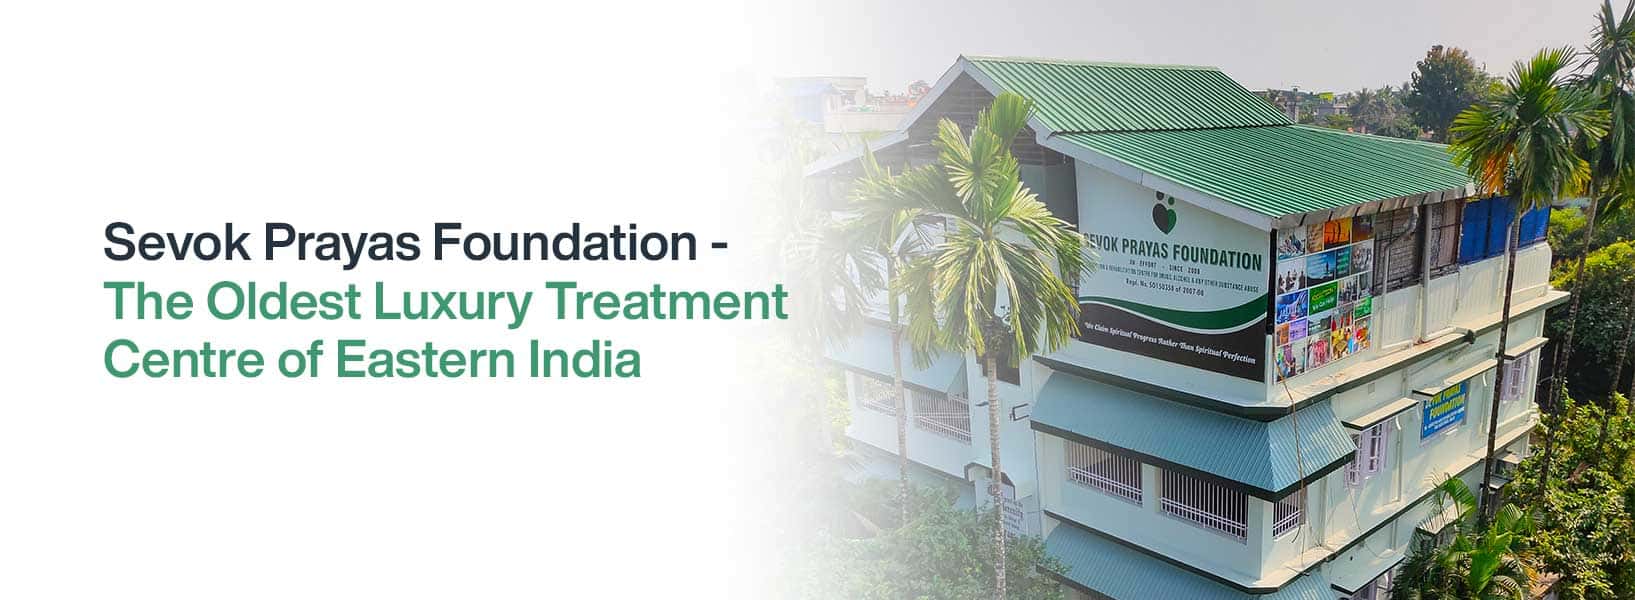 Sevok Prayas Foundation - The Oldest Luxury Treatment Centre of Eastern India. 